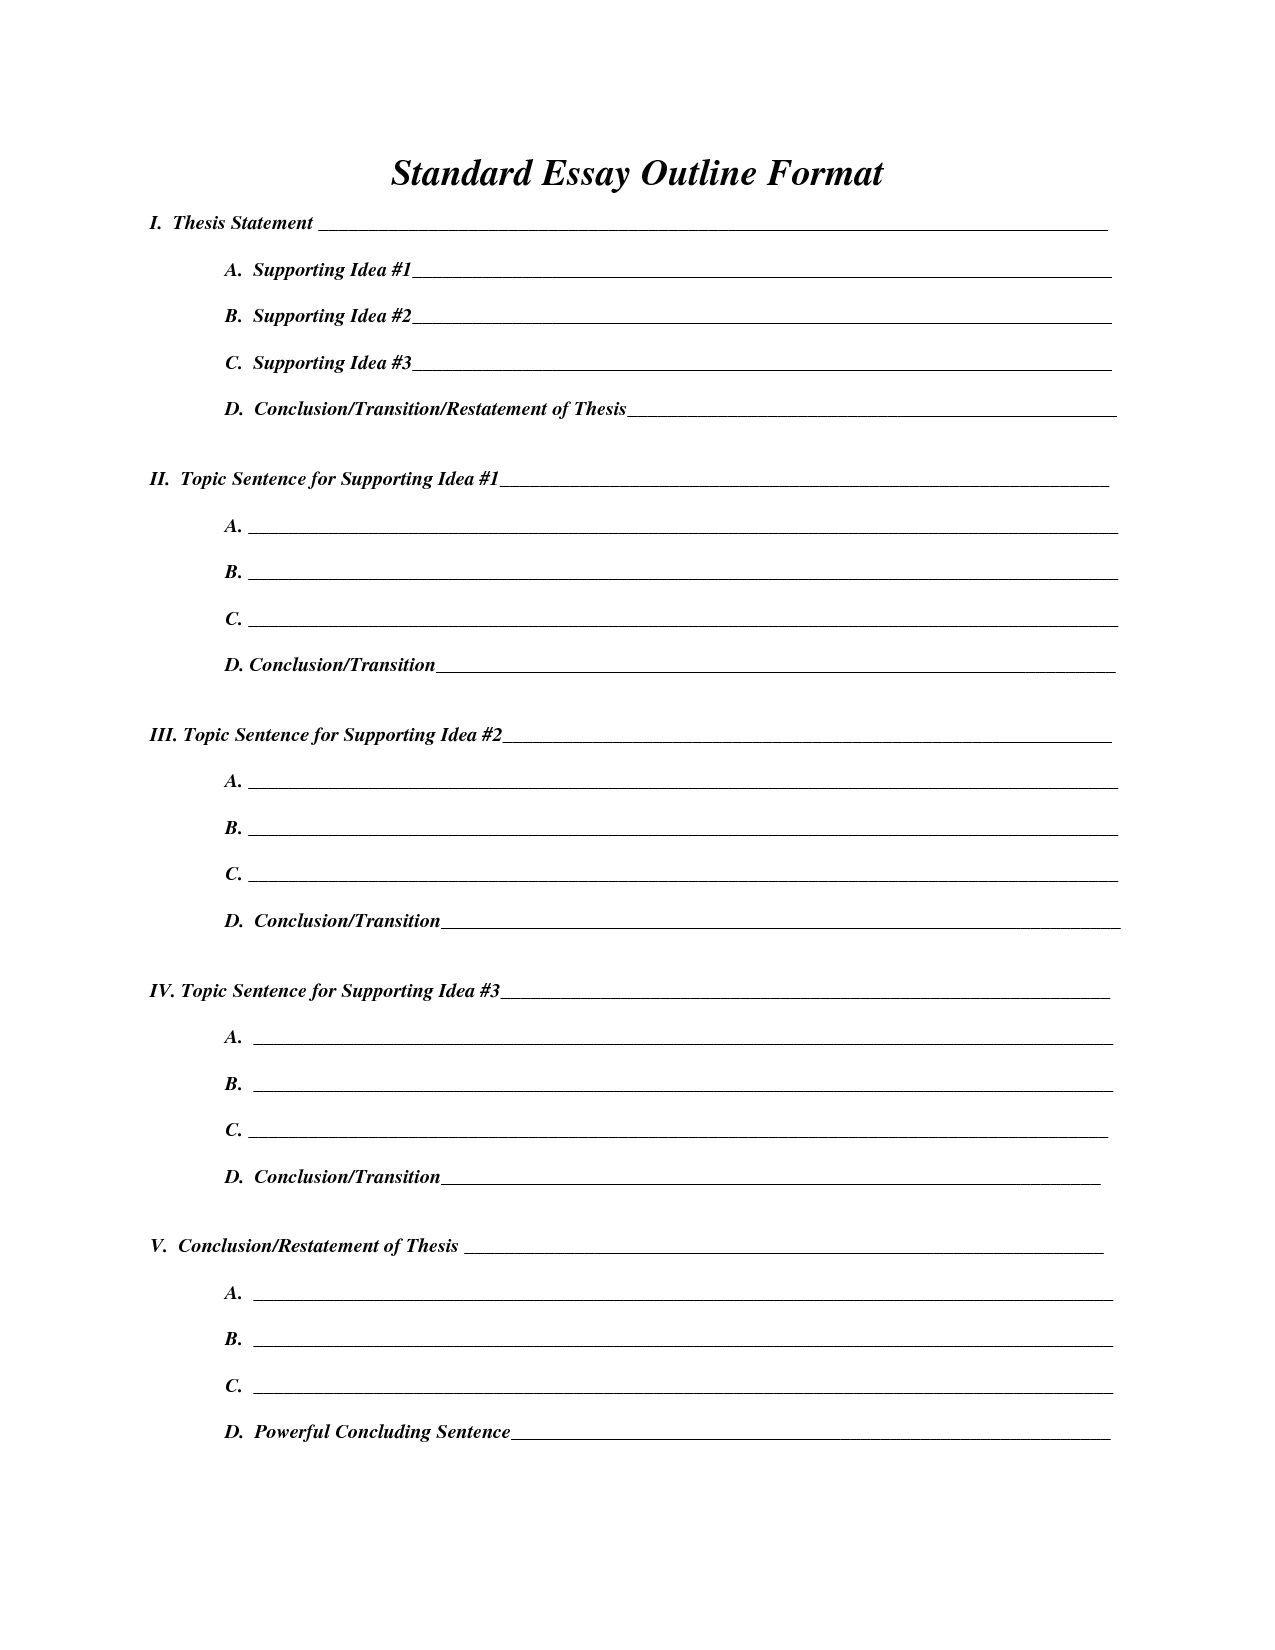 Essay Outline Template Bravebtr In Blank Essay Outline Format19934 Argumentative Essay Outline Research Paper Outline Template Essay Outline Template